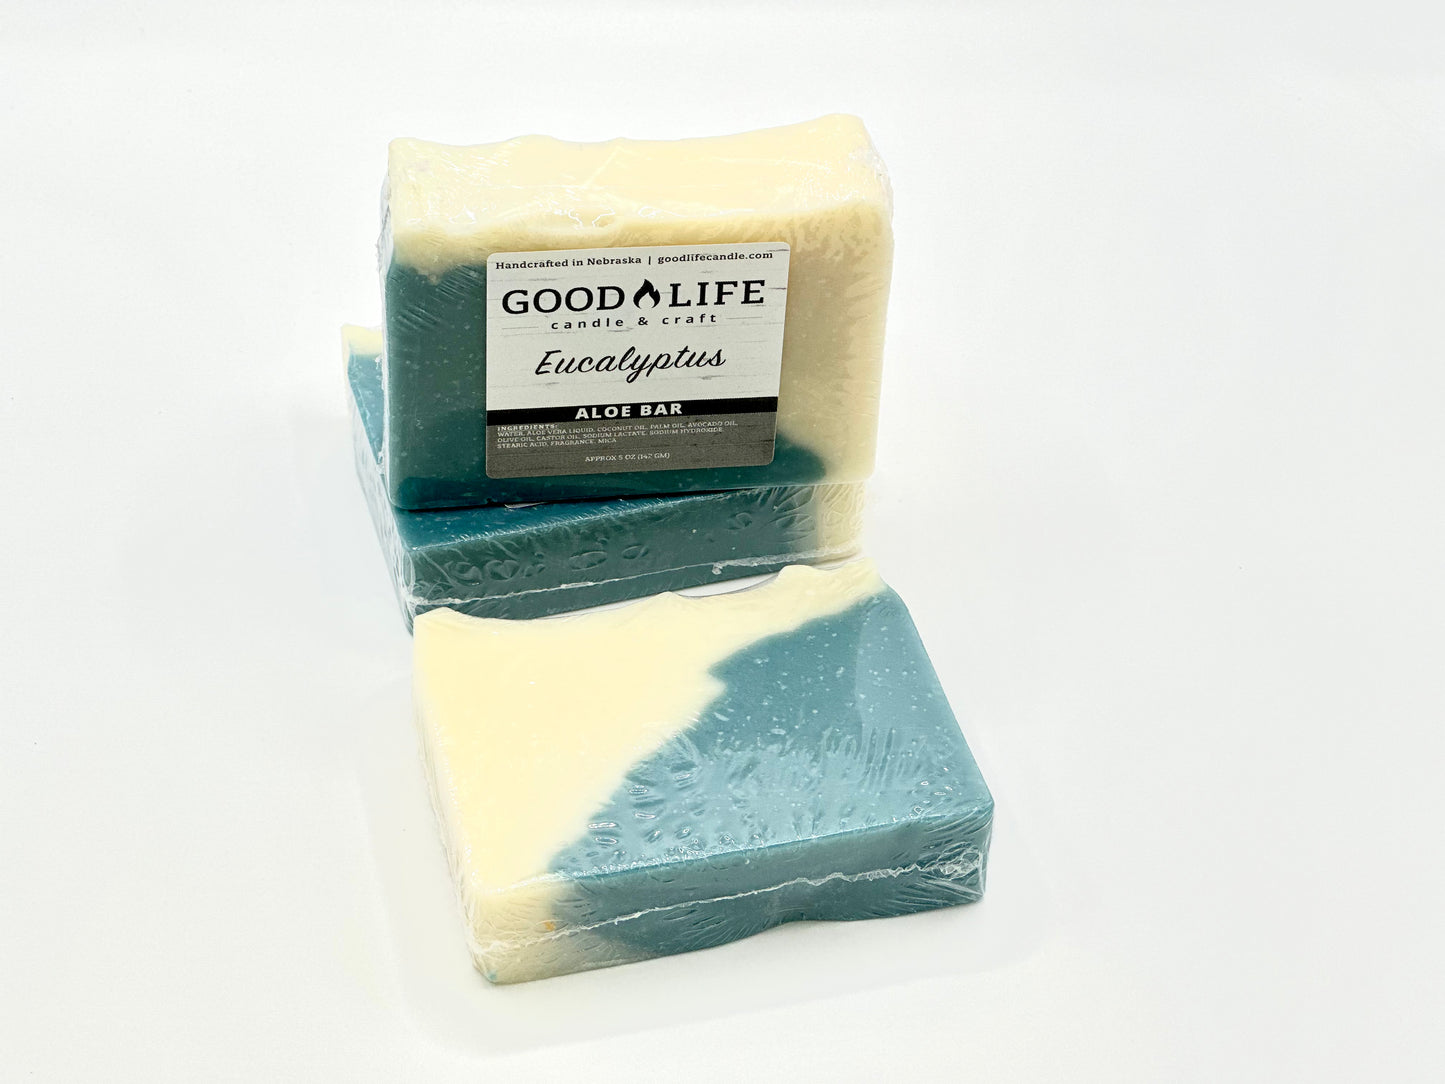 Eucalyptus Bar Soap